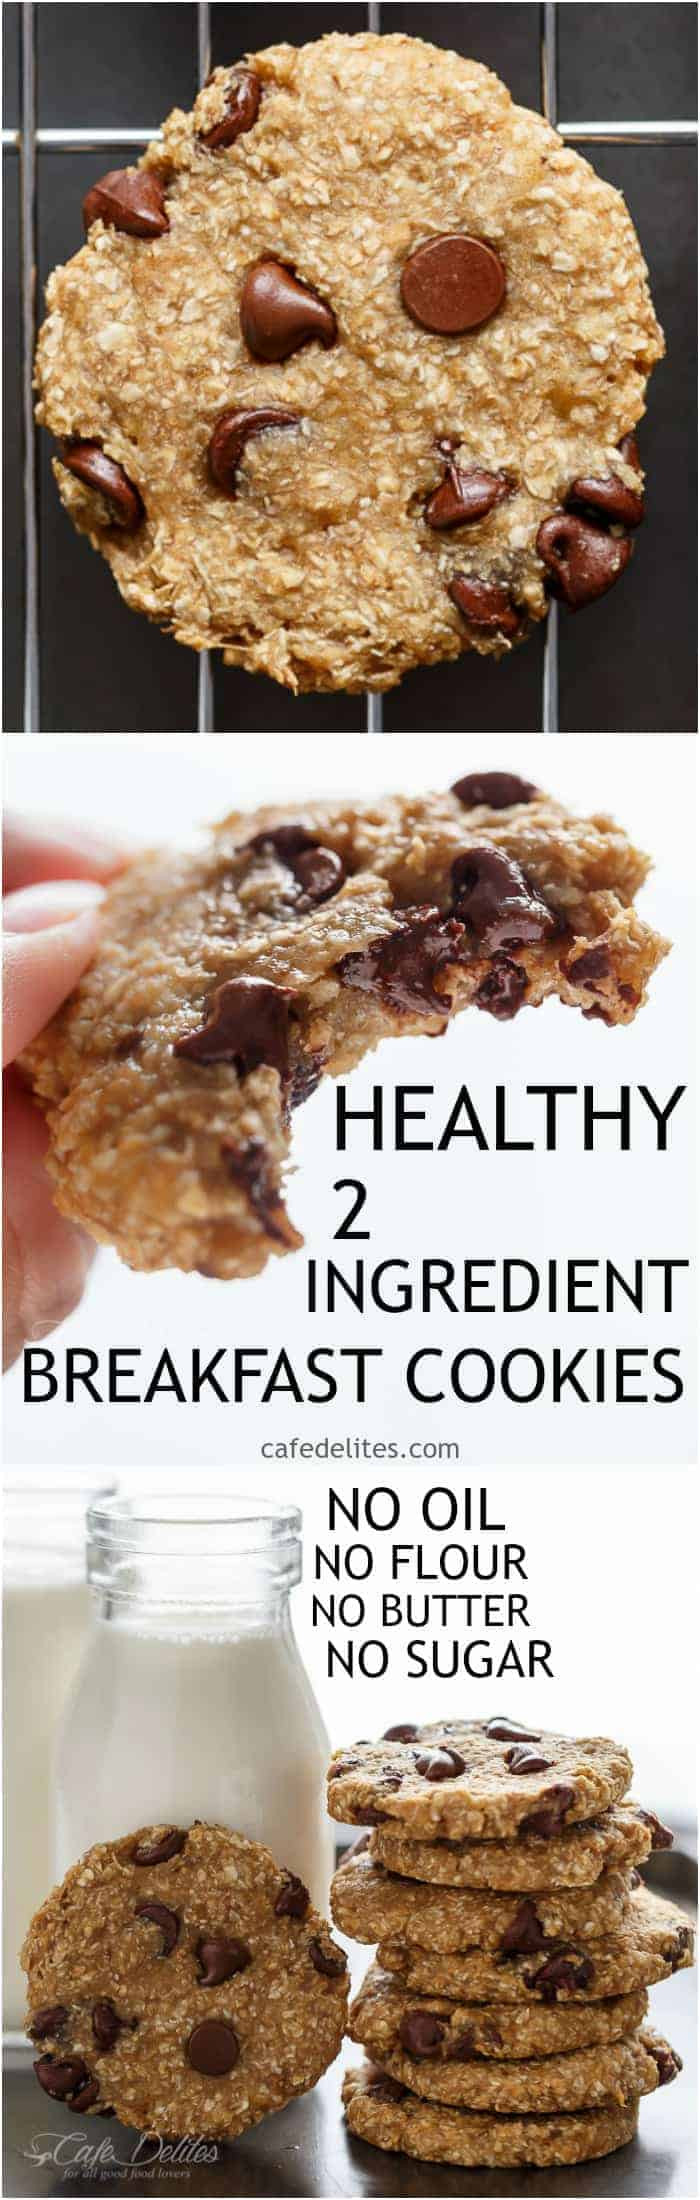 Healthy Cookies Recipe Low Calorie
 Breakfast Cookies Healthy & 2 Ingre nts Cafe Delites